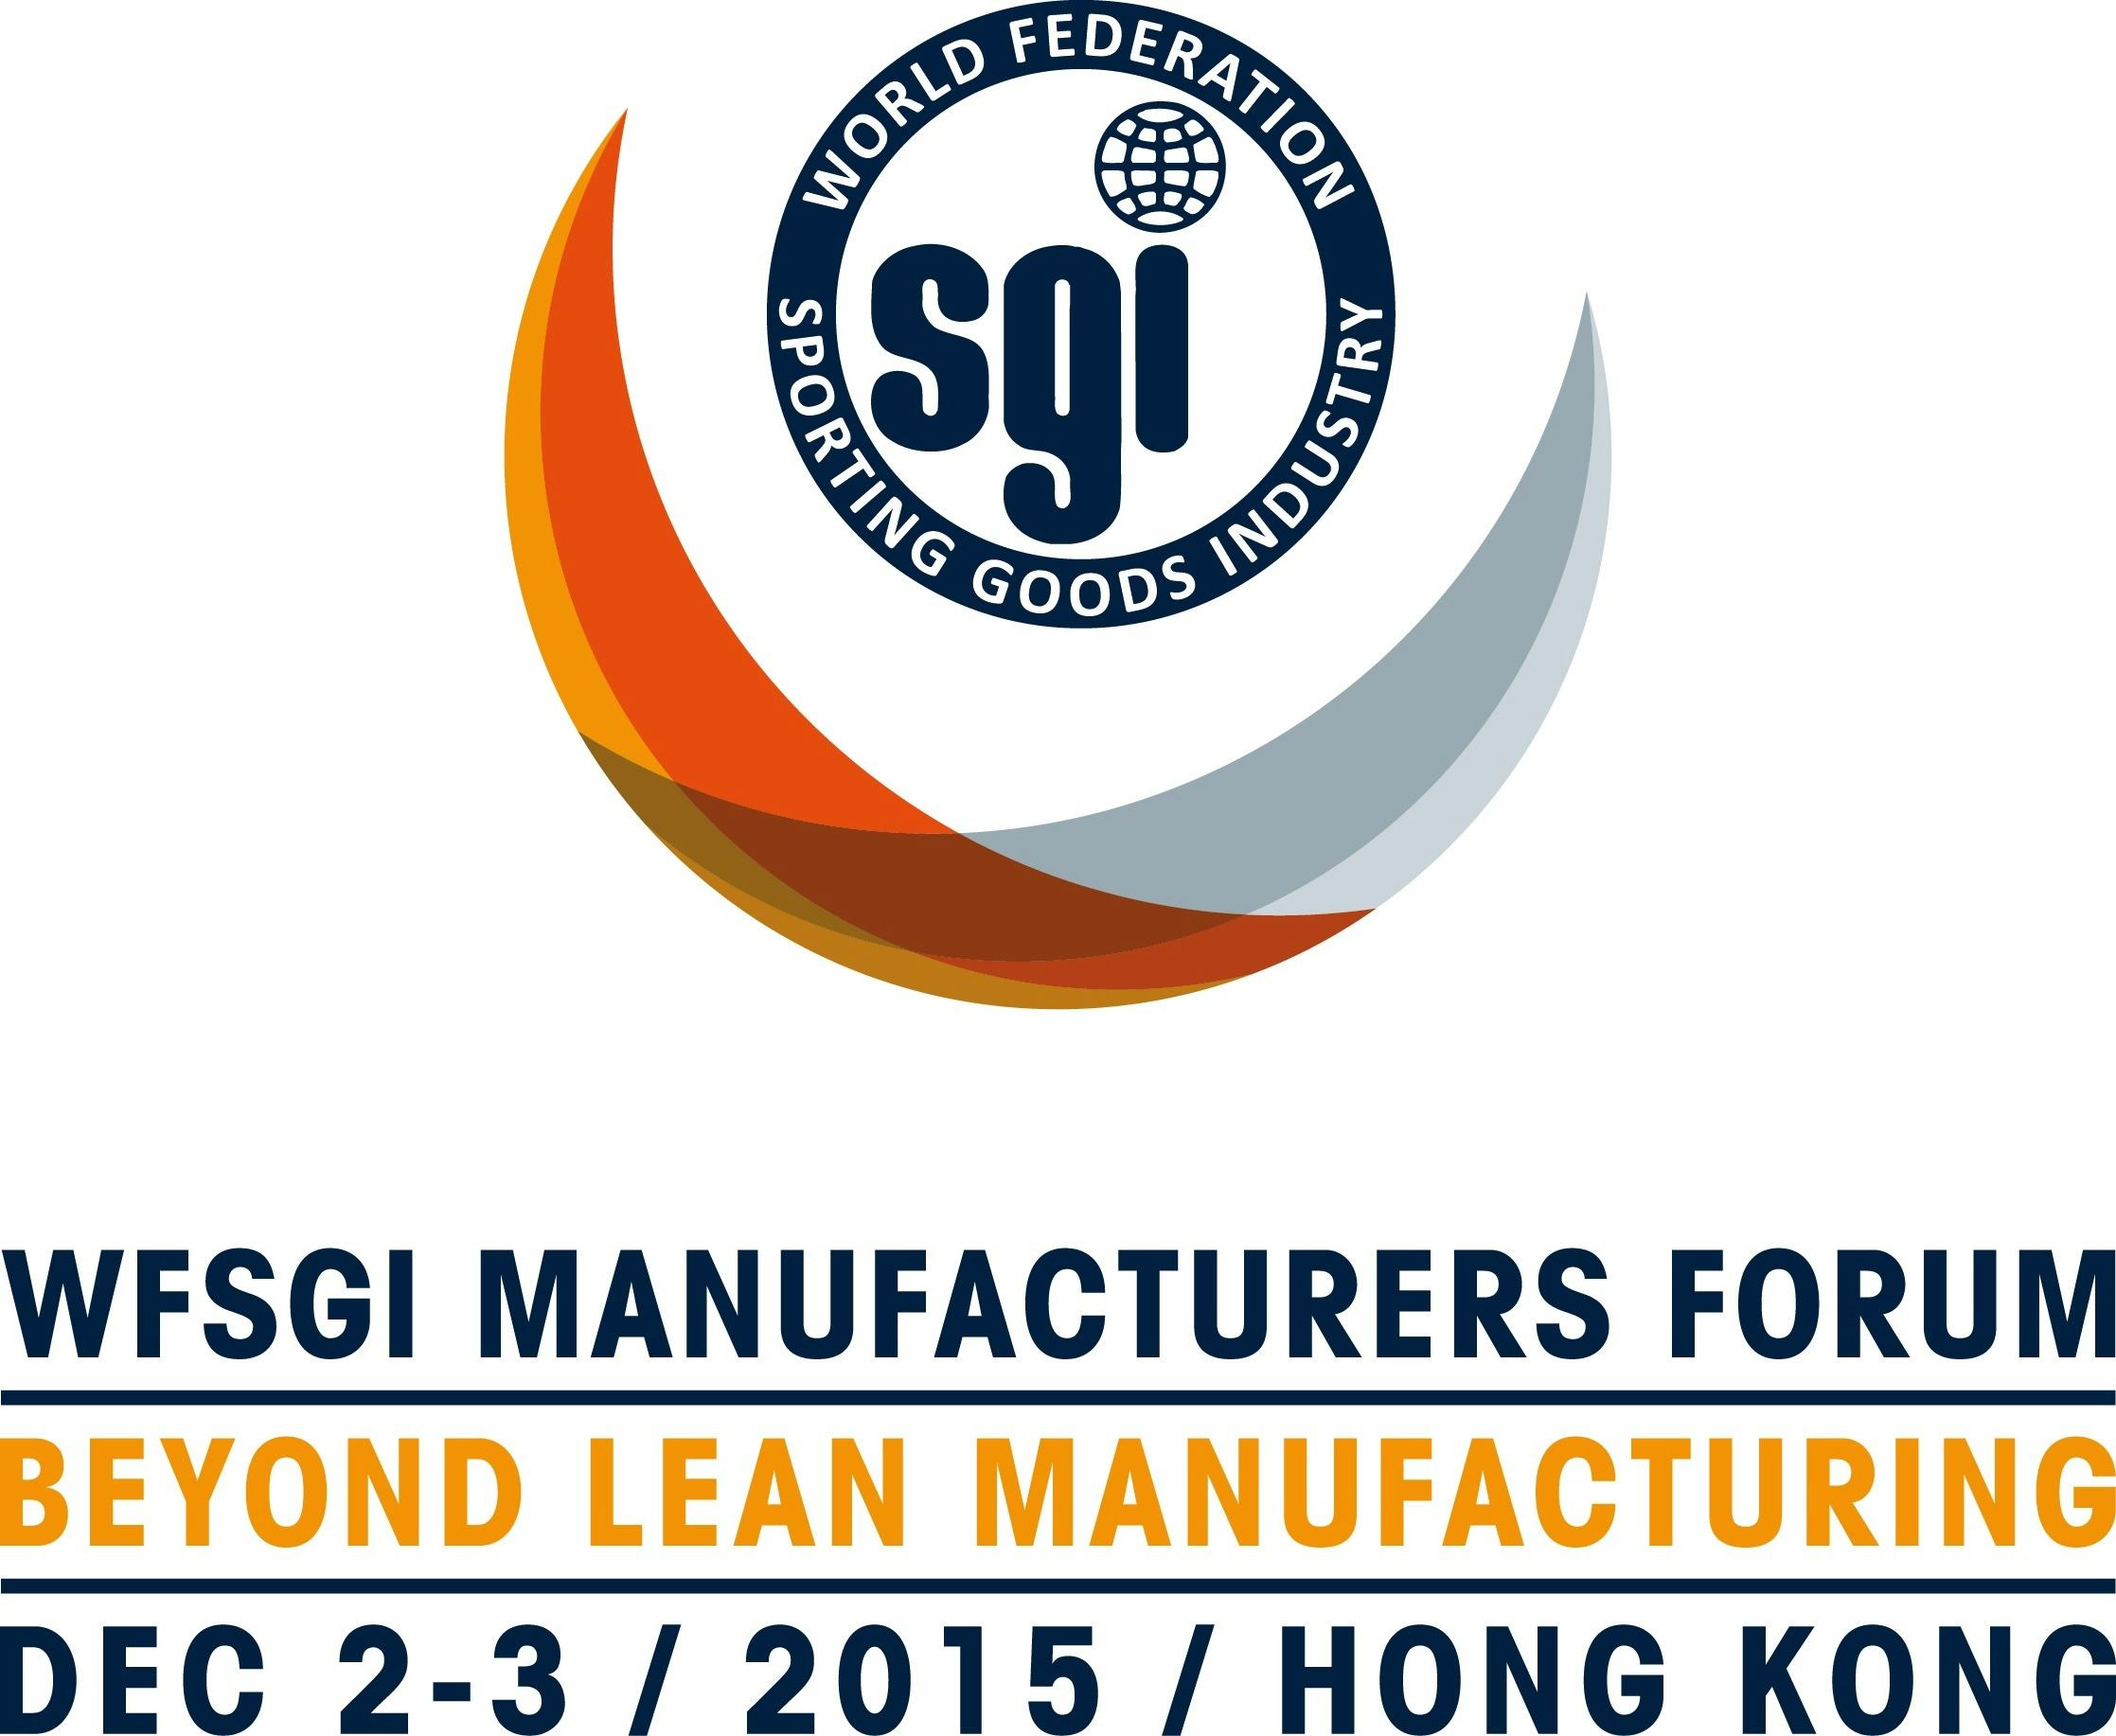 WFSGI下一個製造商論壇將於2015年12月2日到3日在香港舉行。-Photo WFSGI